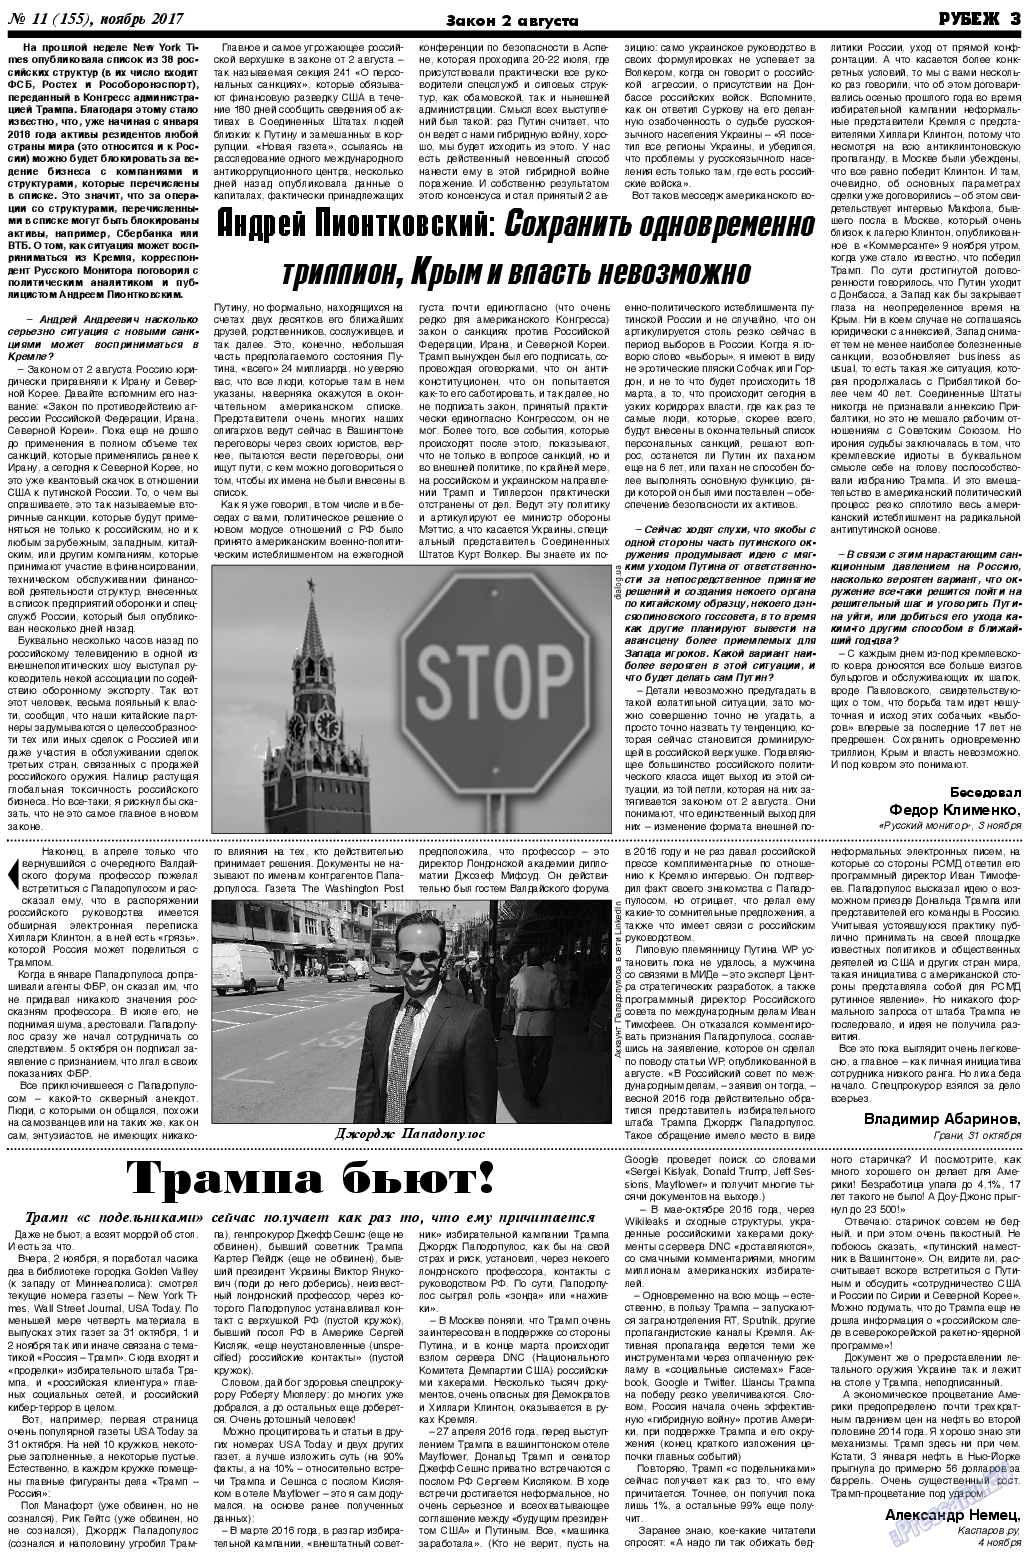 Рубеж, газета. 2017 №11 стр.3